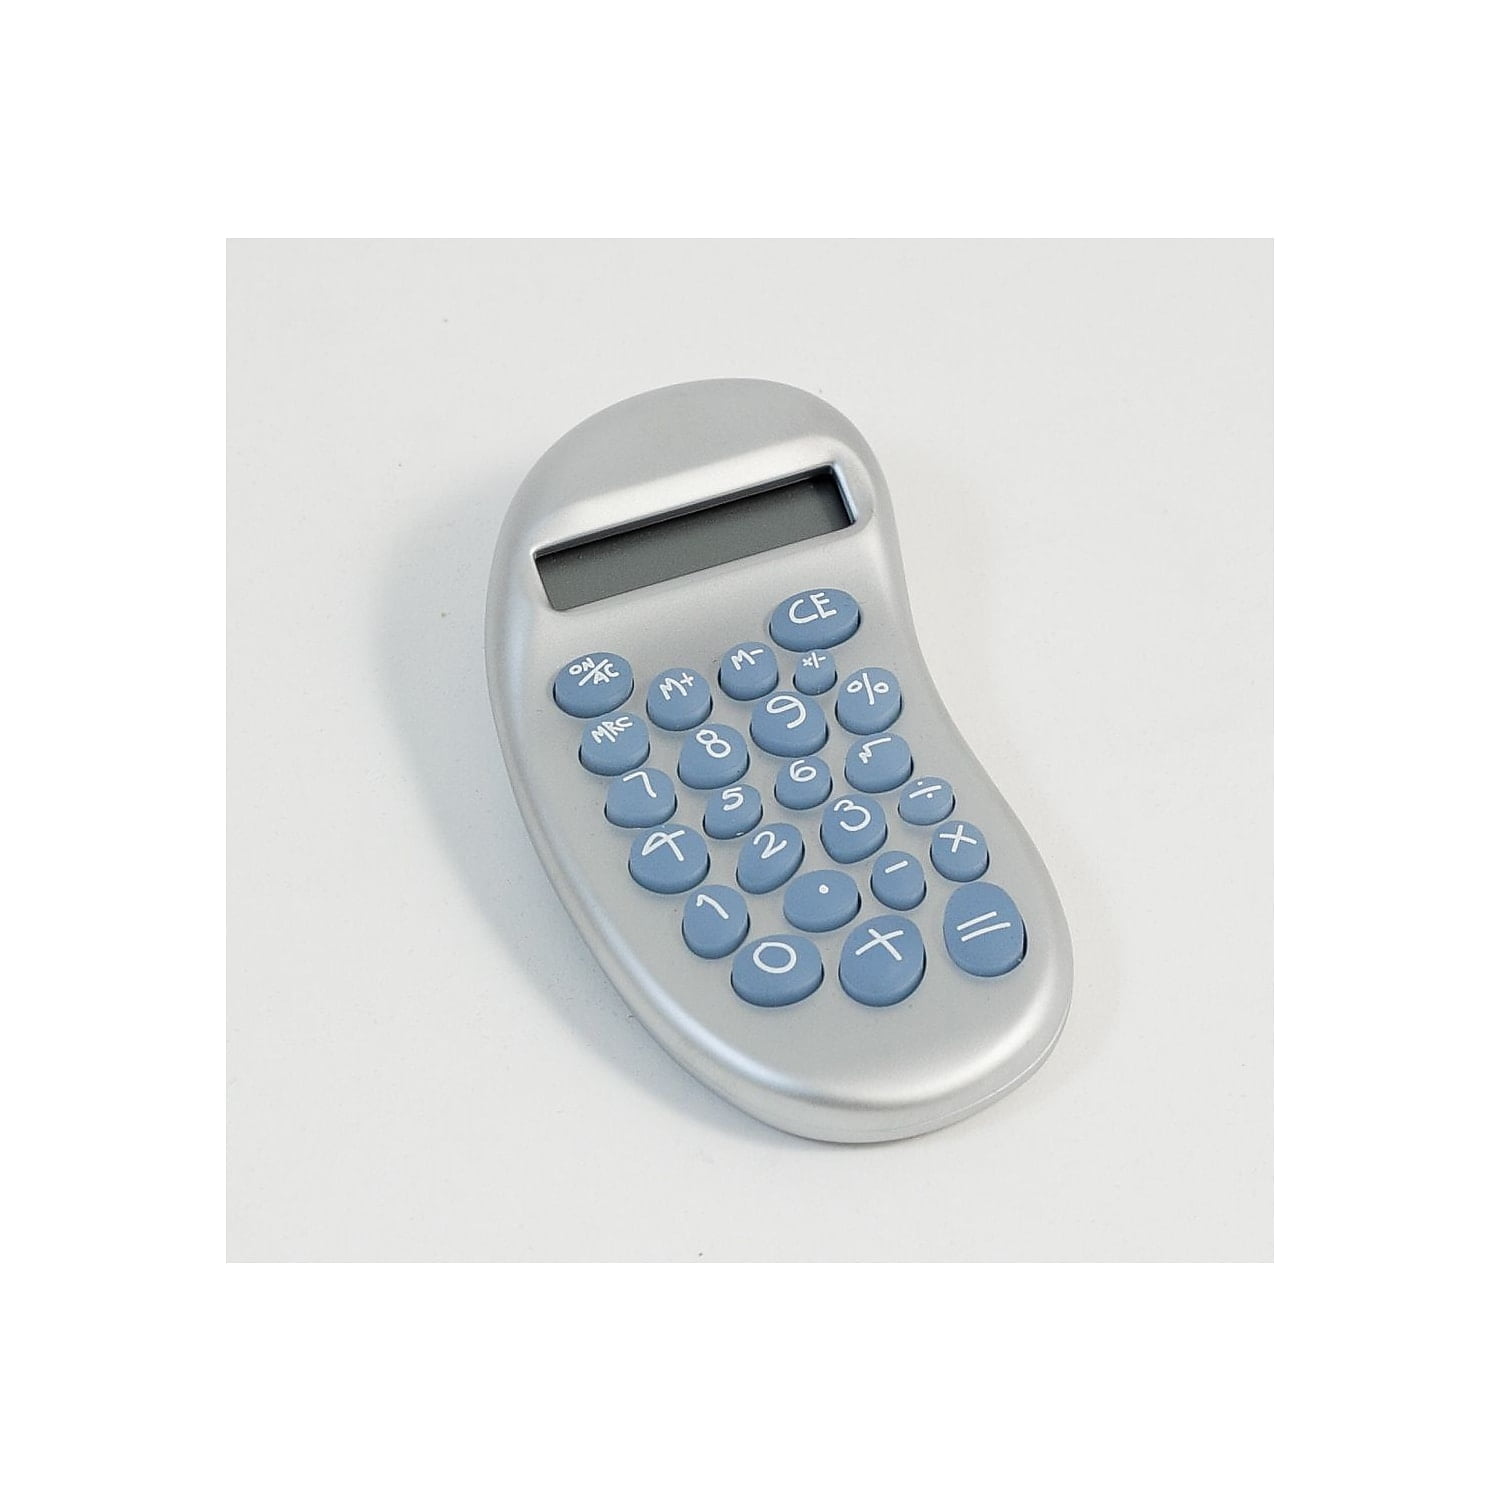 Bey-berk International D382 Ergonomic Calculator With Satinized Pearl Finish - Silver